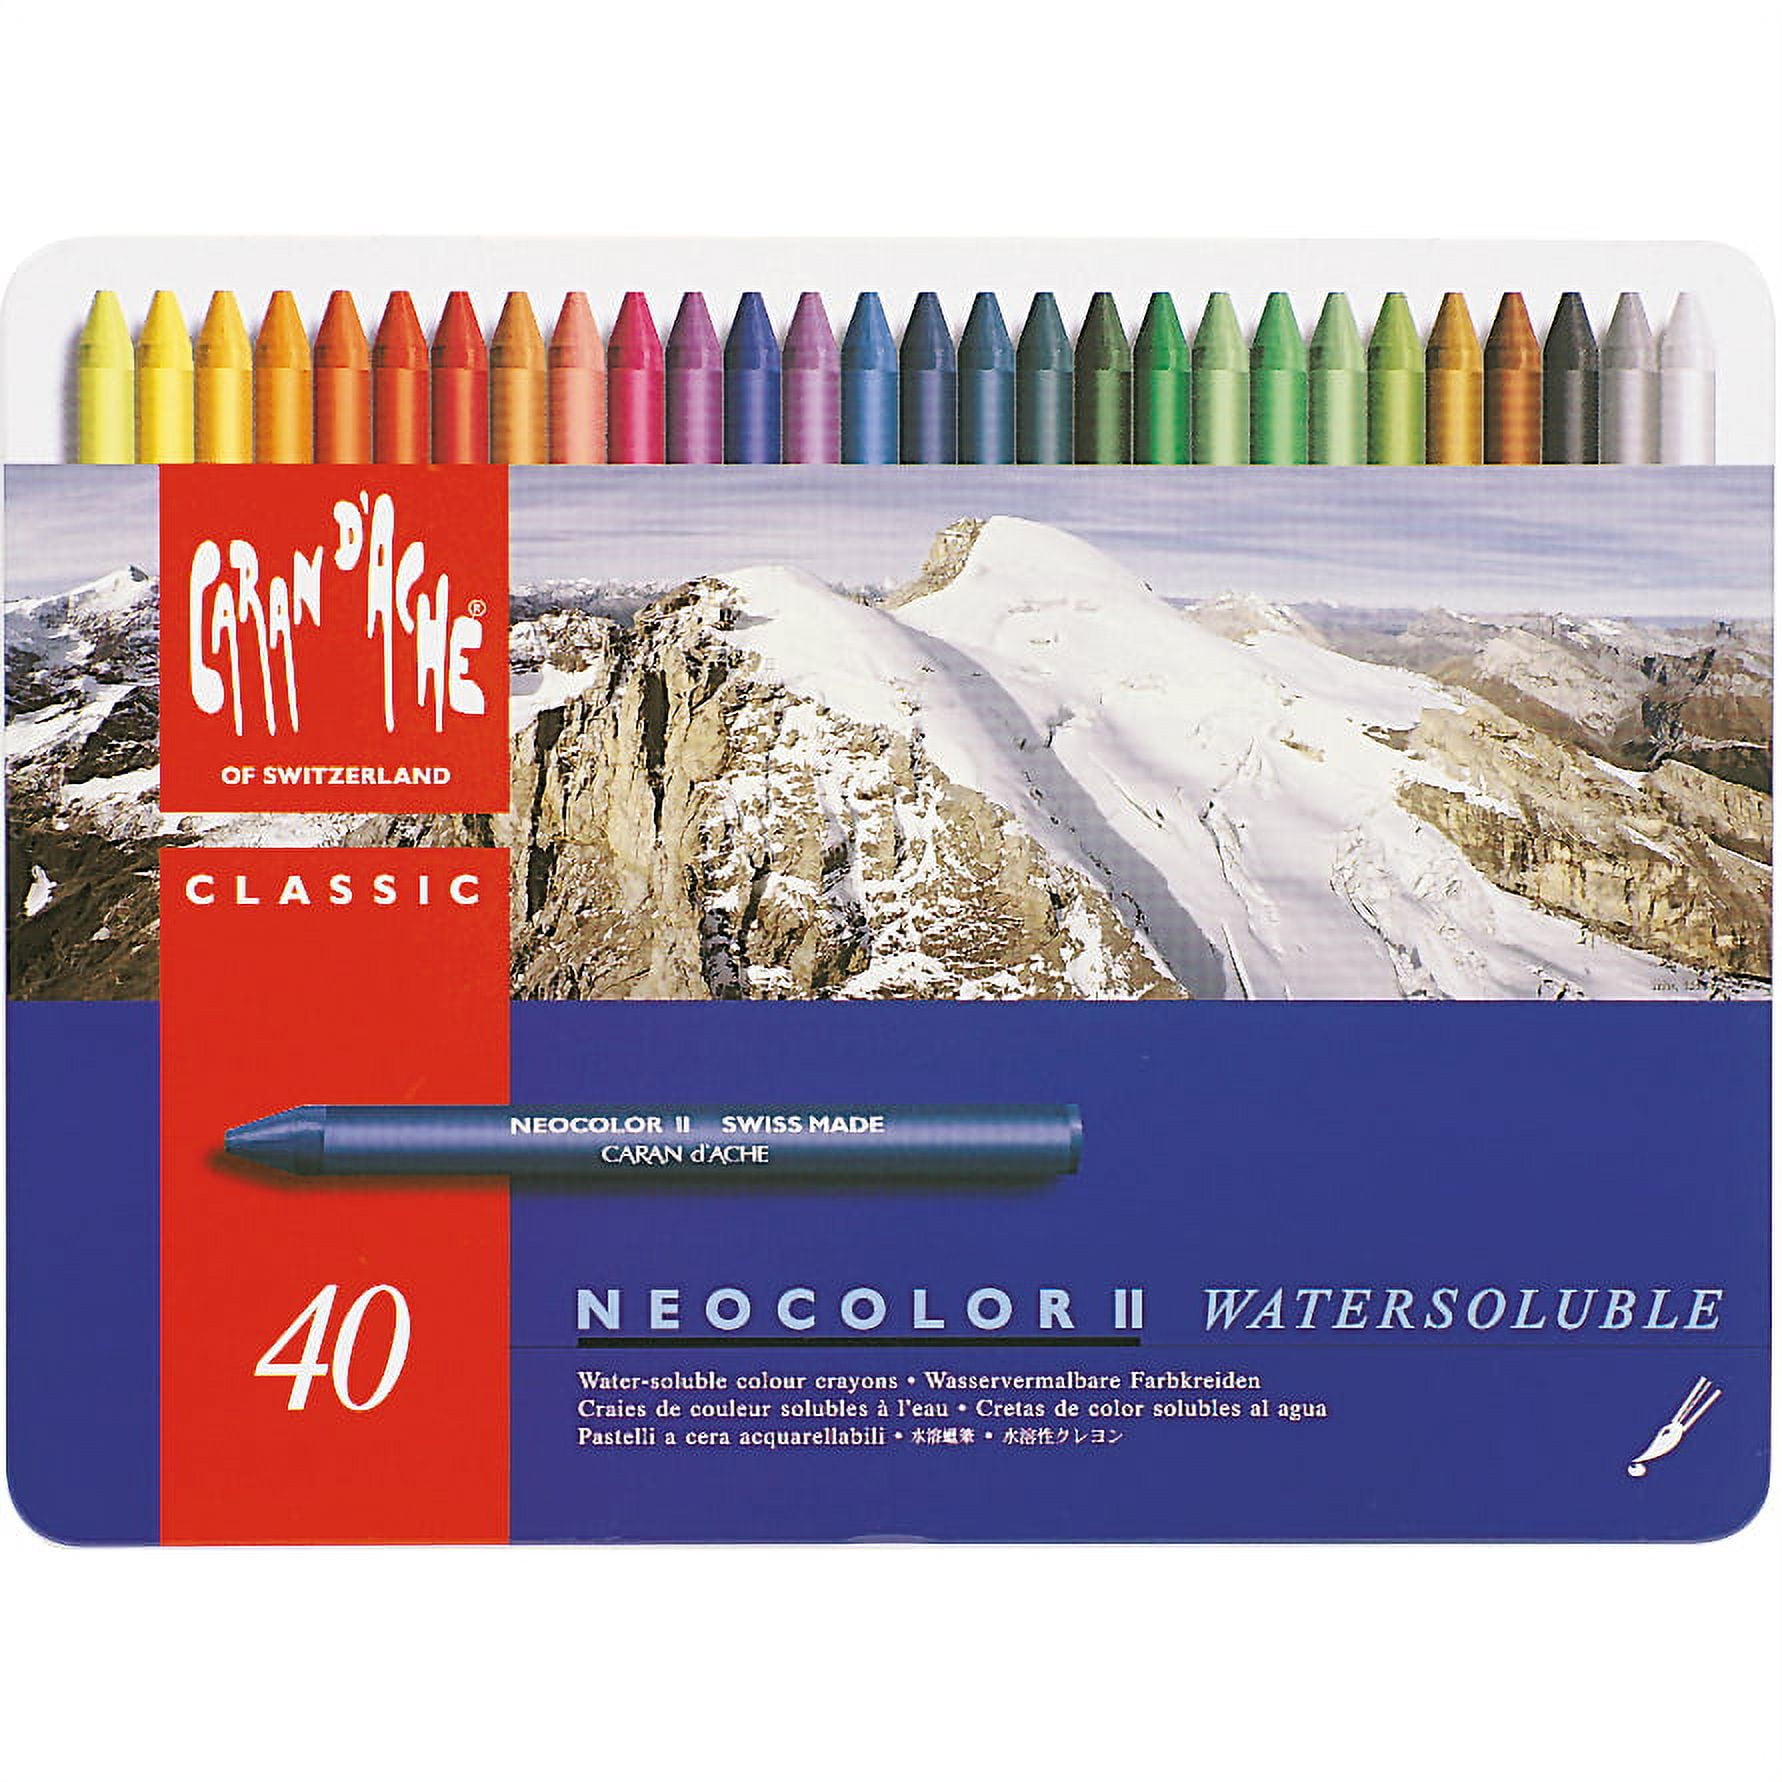 Caran d'Ache, Neocolor II Crayons, 40 Colors 